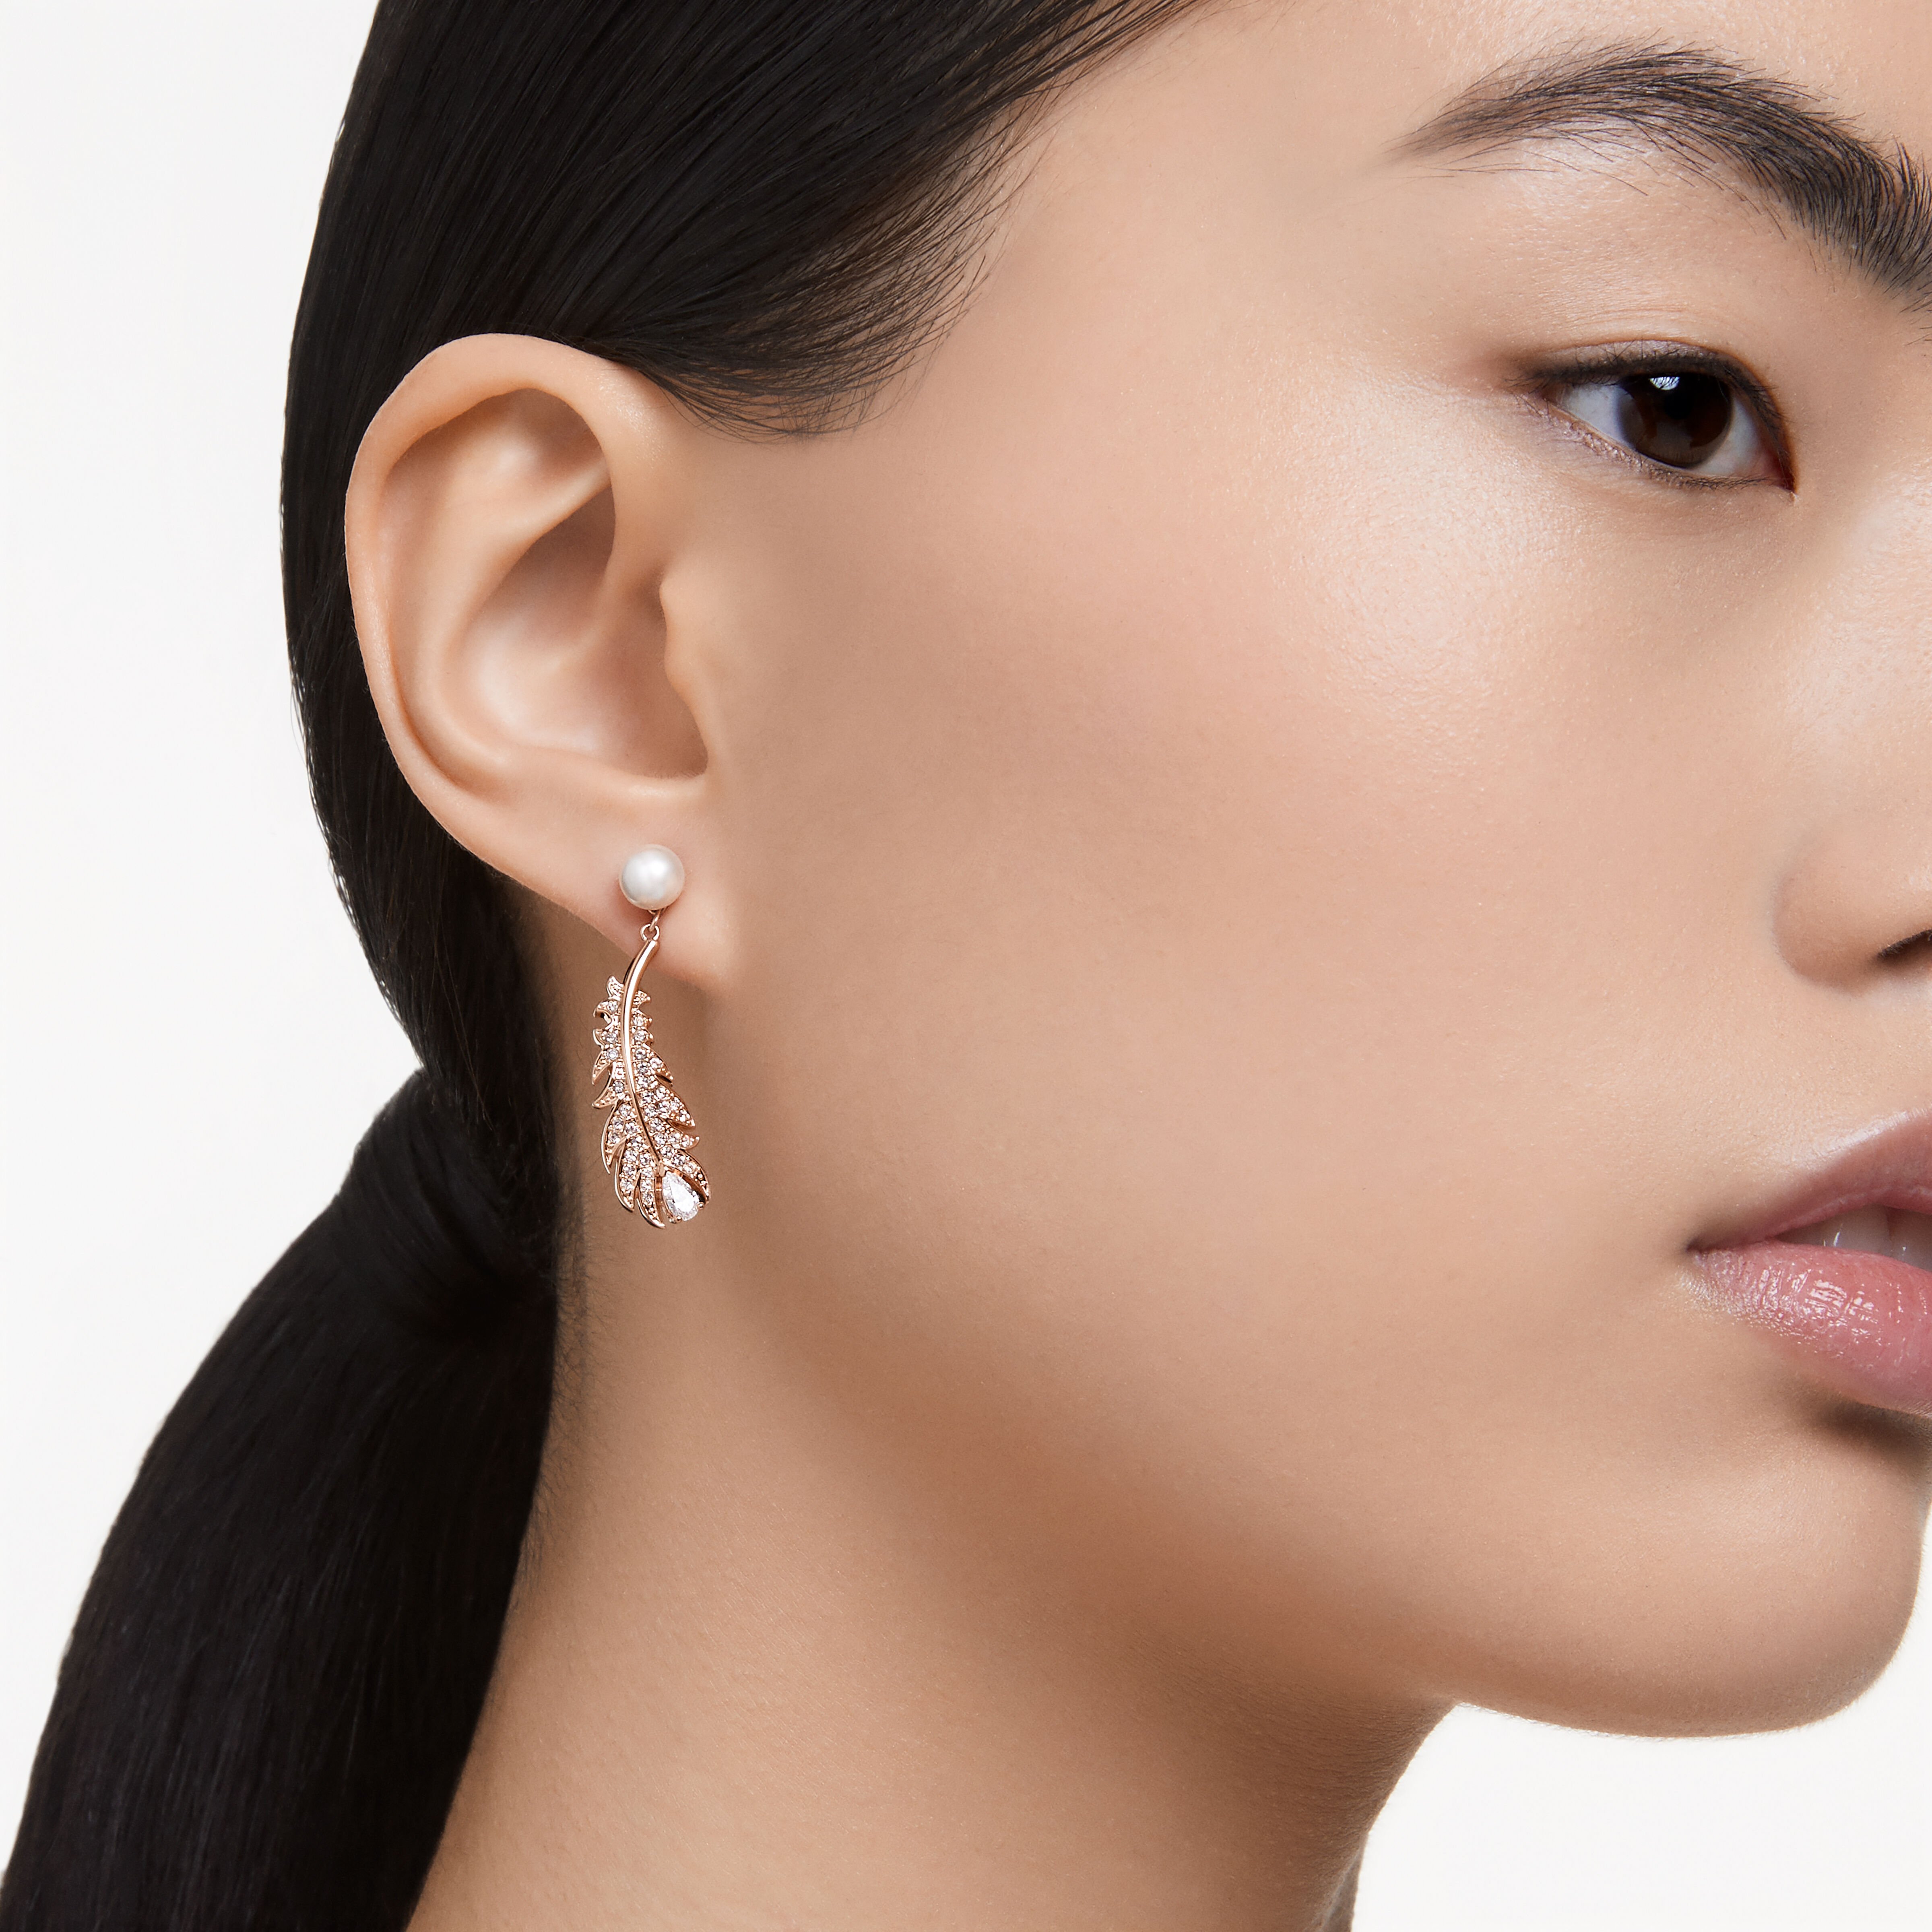 Details more than 140 swarovski cuff earrings